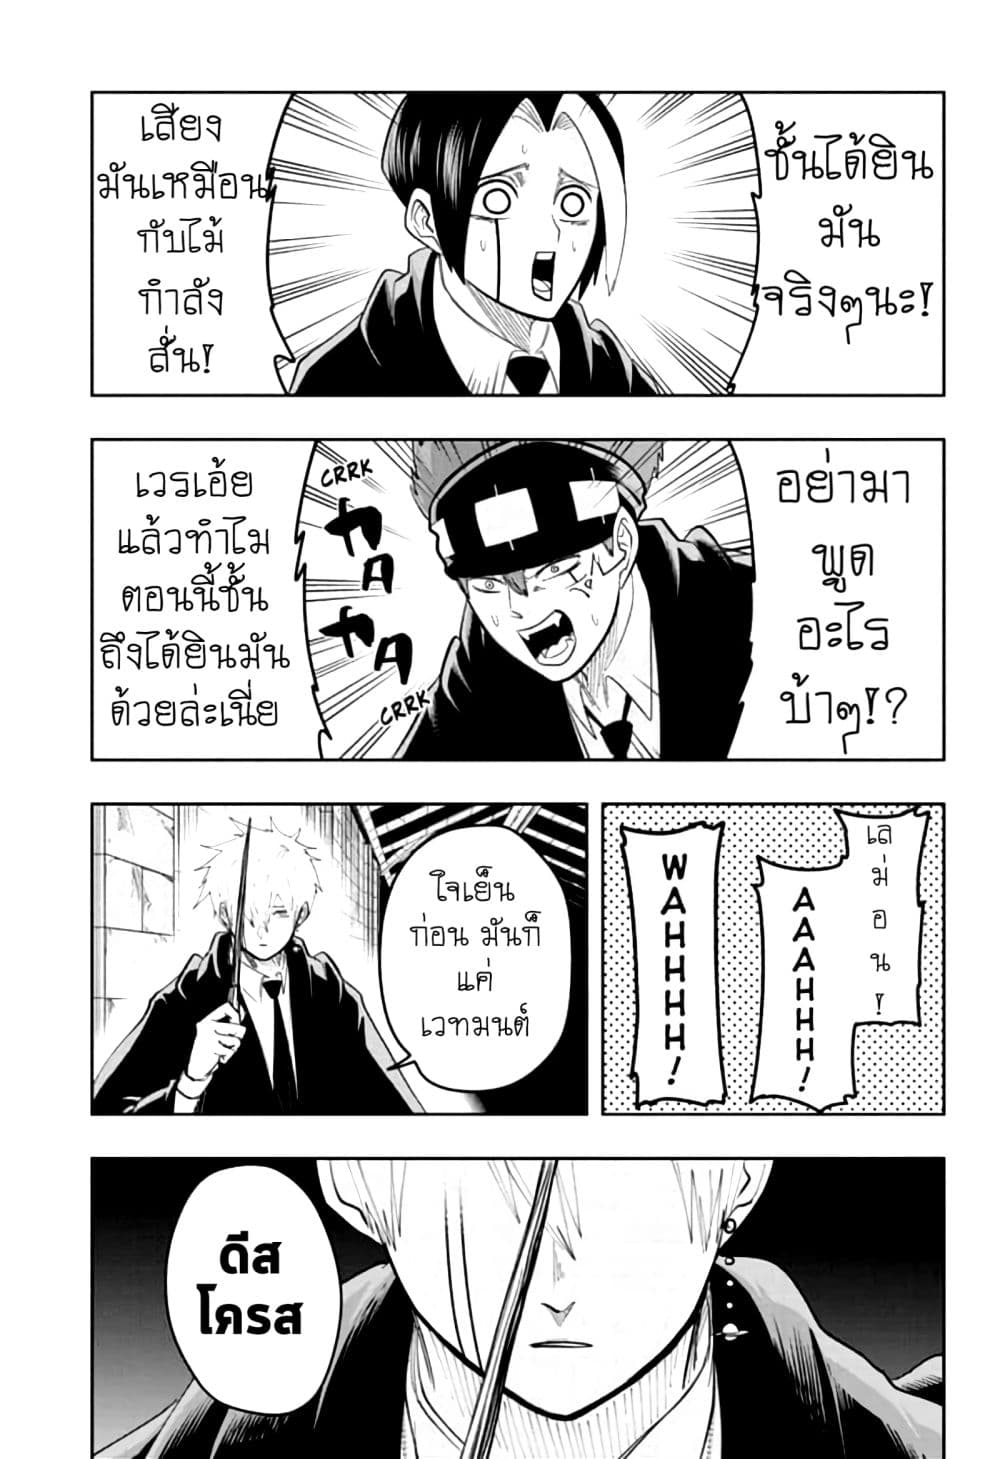 manga168.com